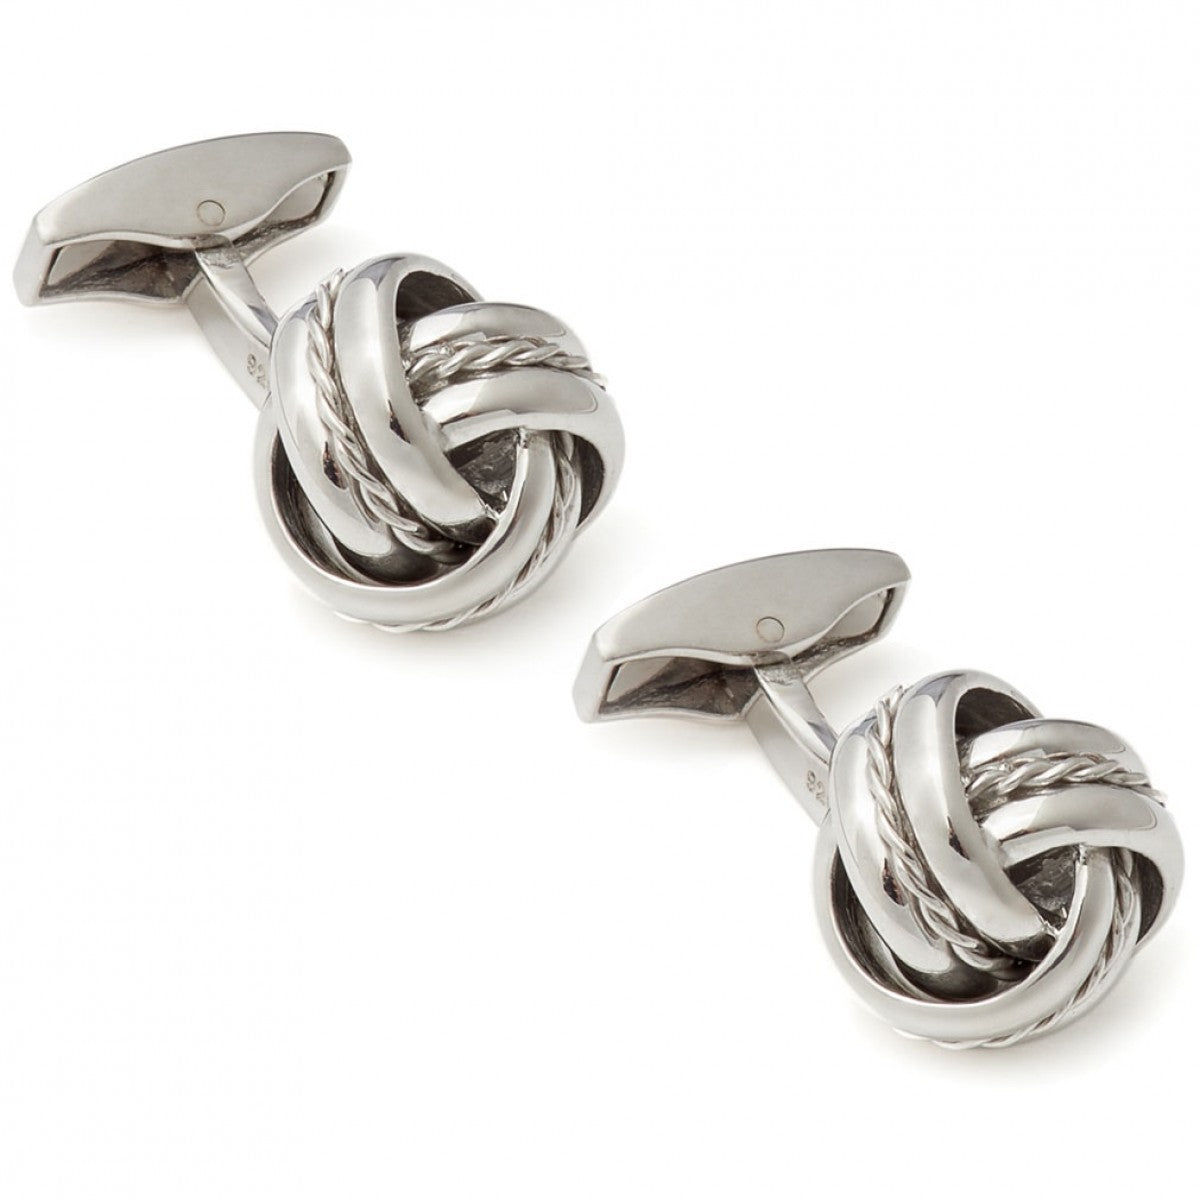 Tateossian Royal Sterling Silver Knot Cufflinks